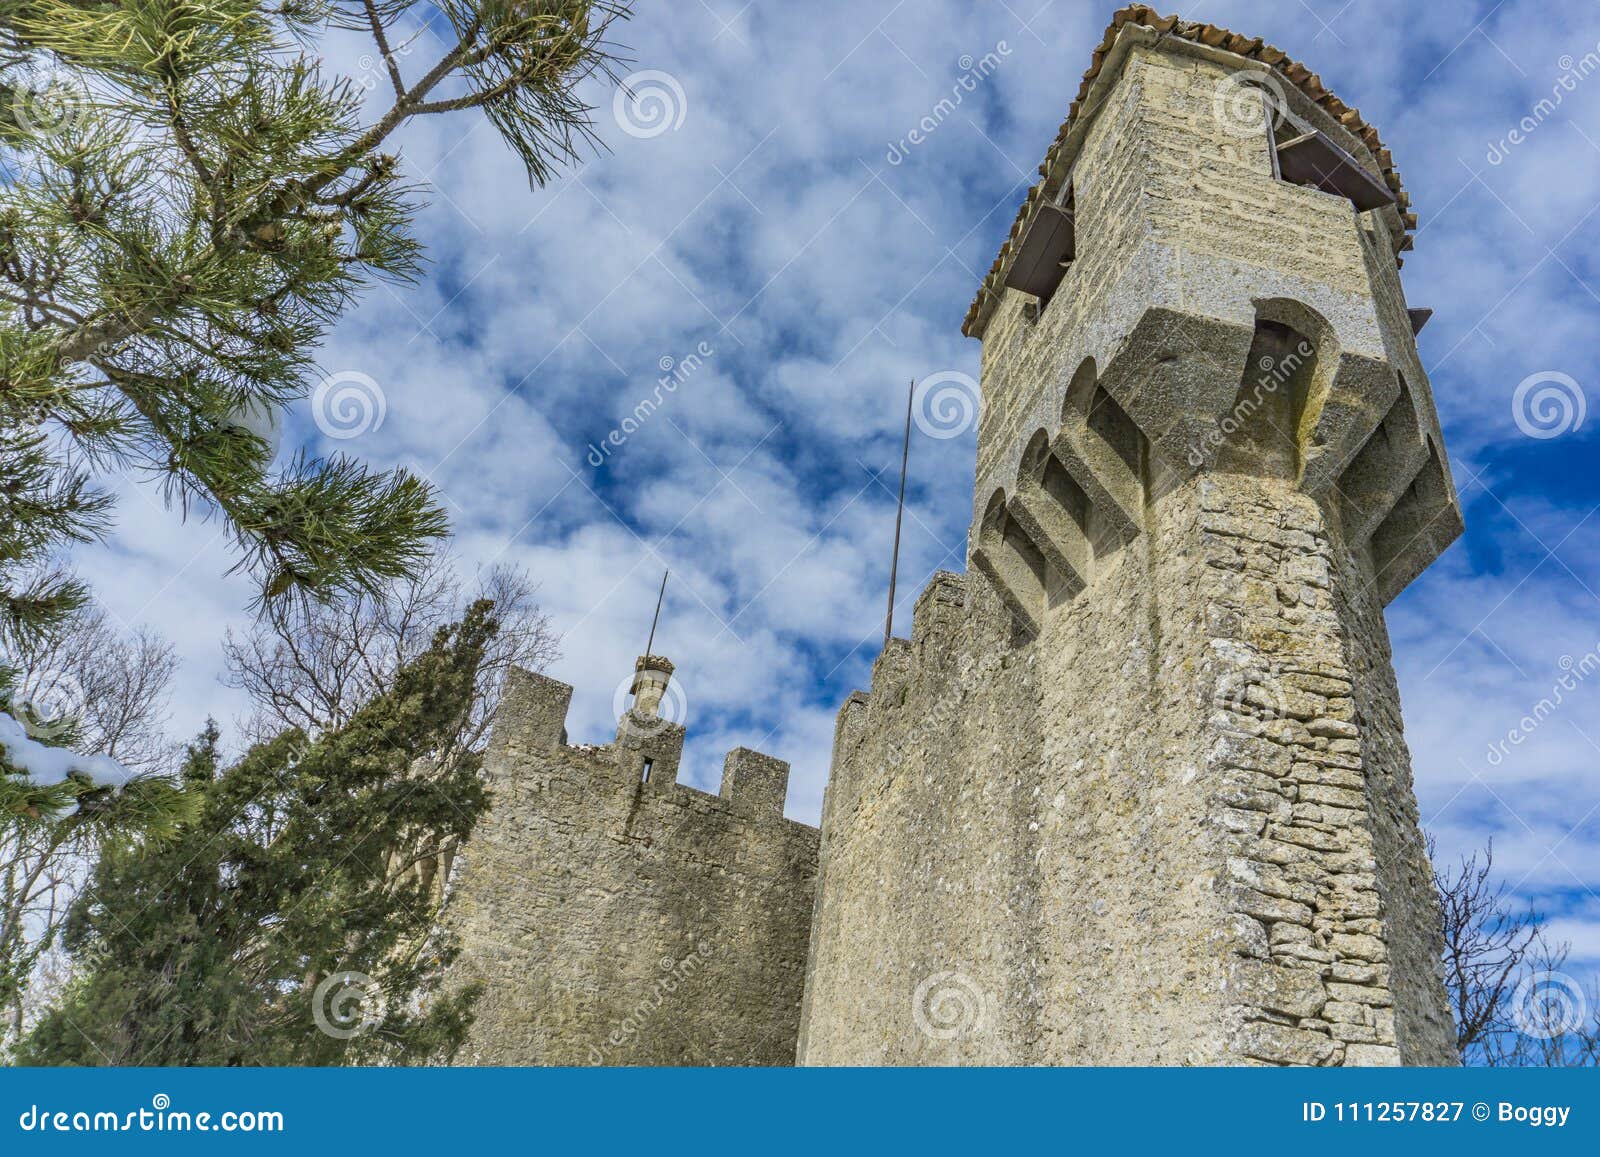 fortress of cesta on mount titano, san marino